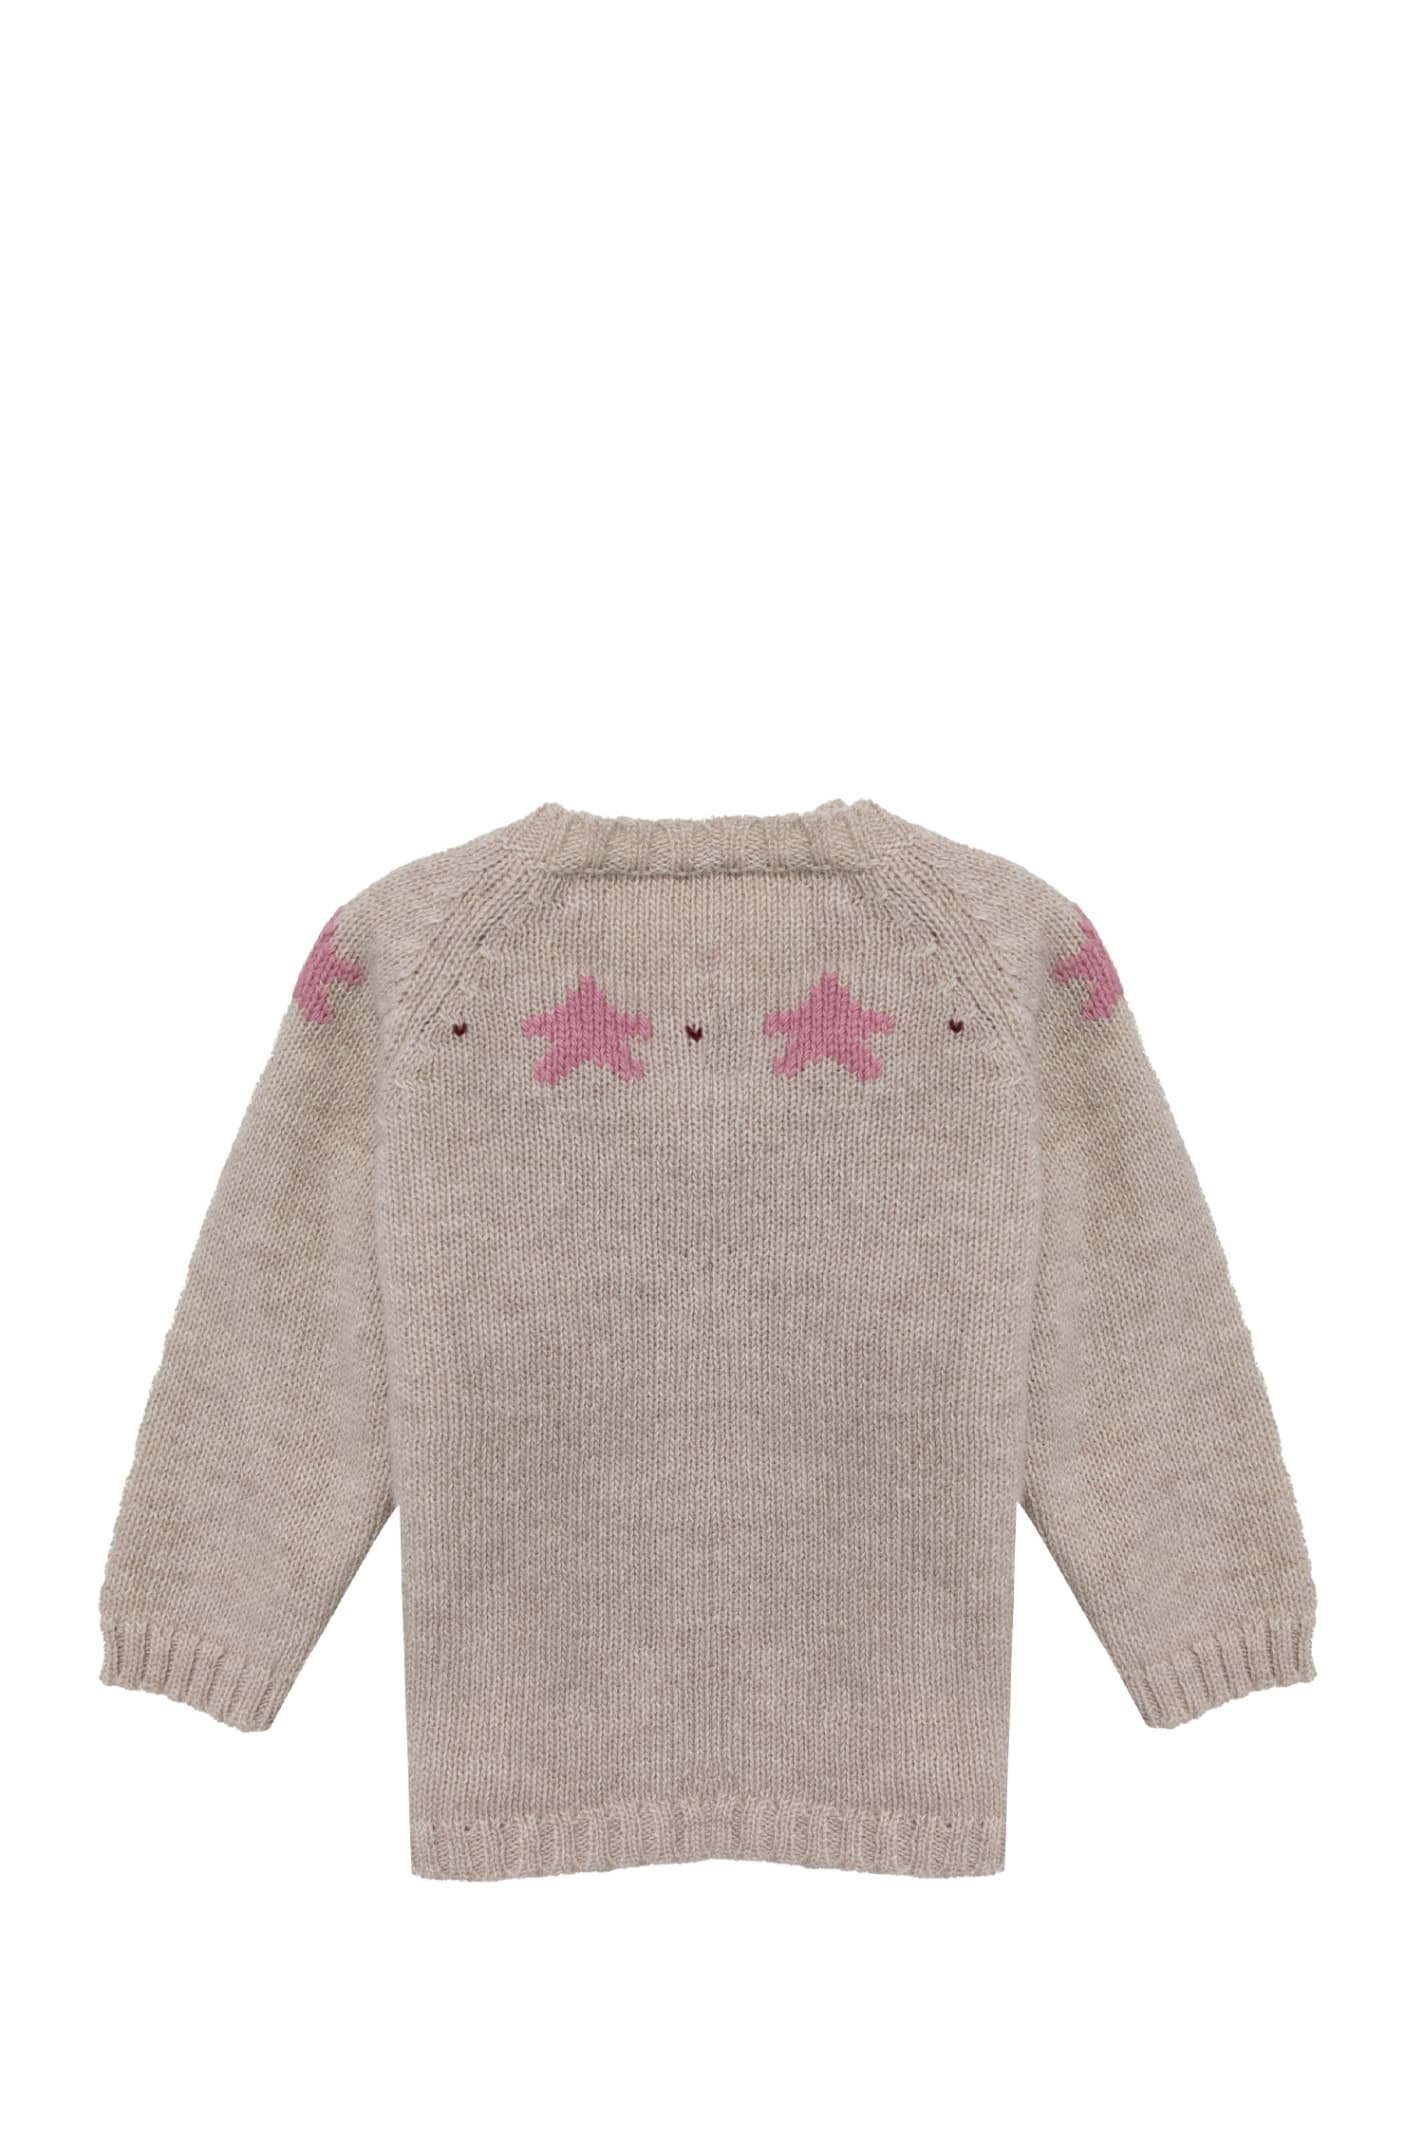 Shop La Stupenderia Wool Sweater